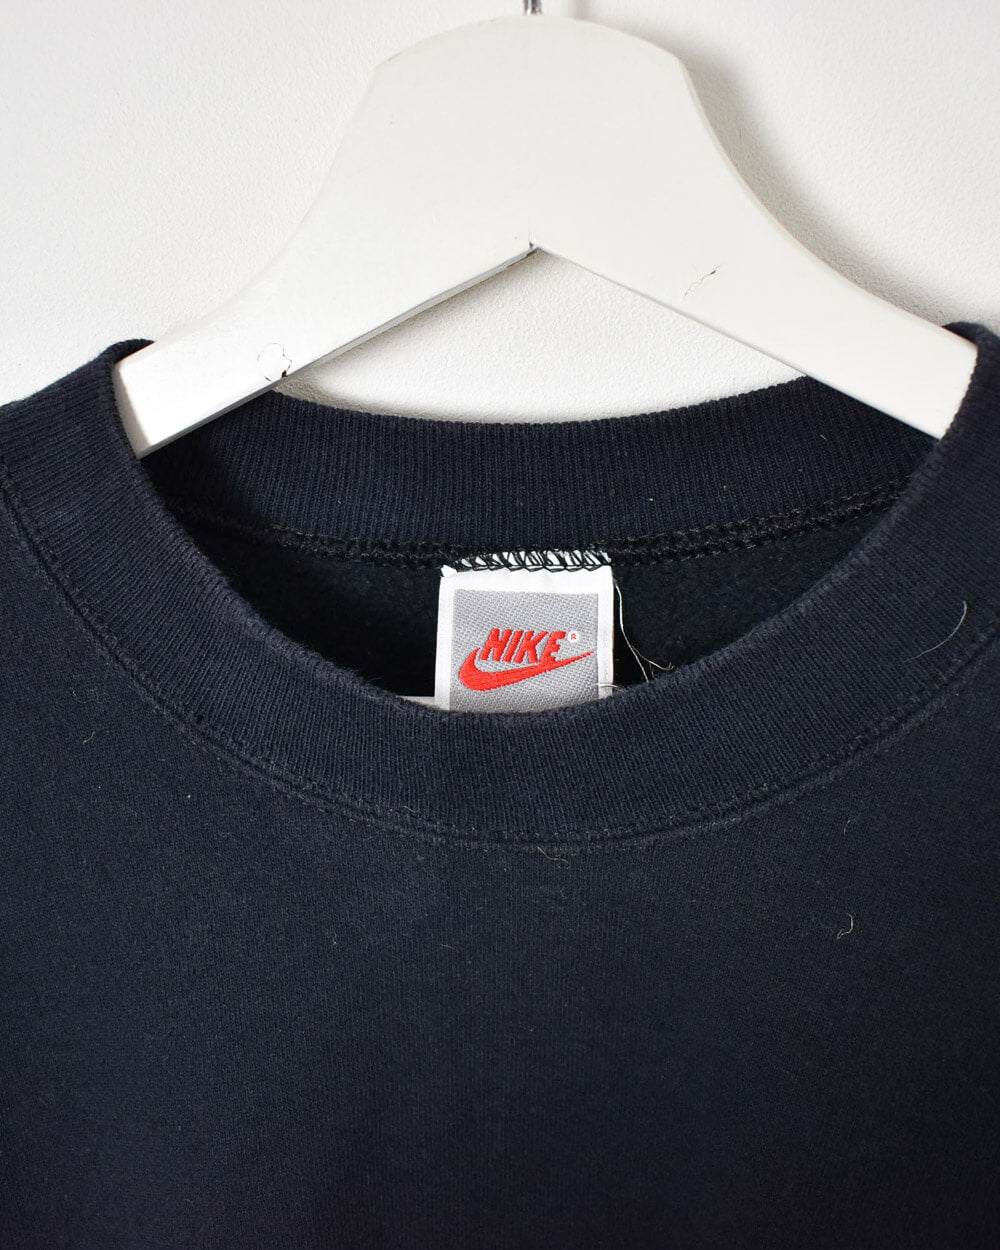 Navy Nike Plain Sweatshirt - Small